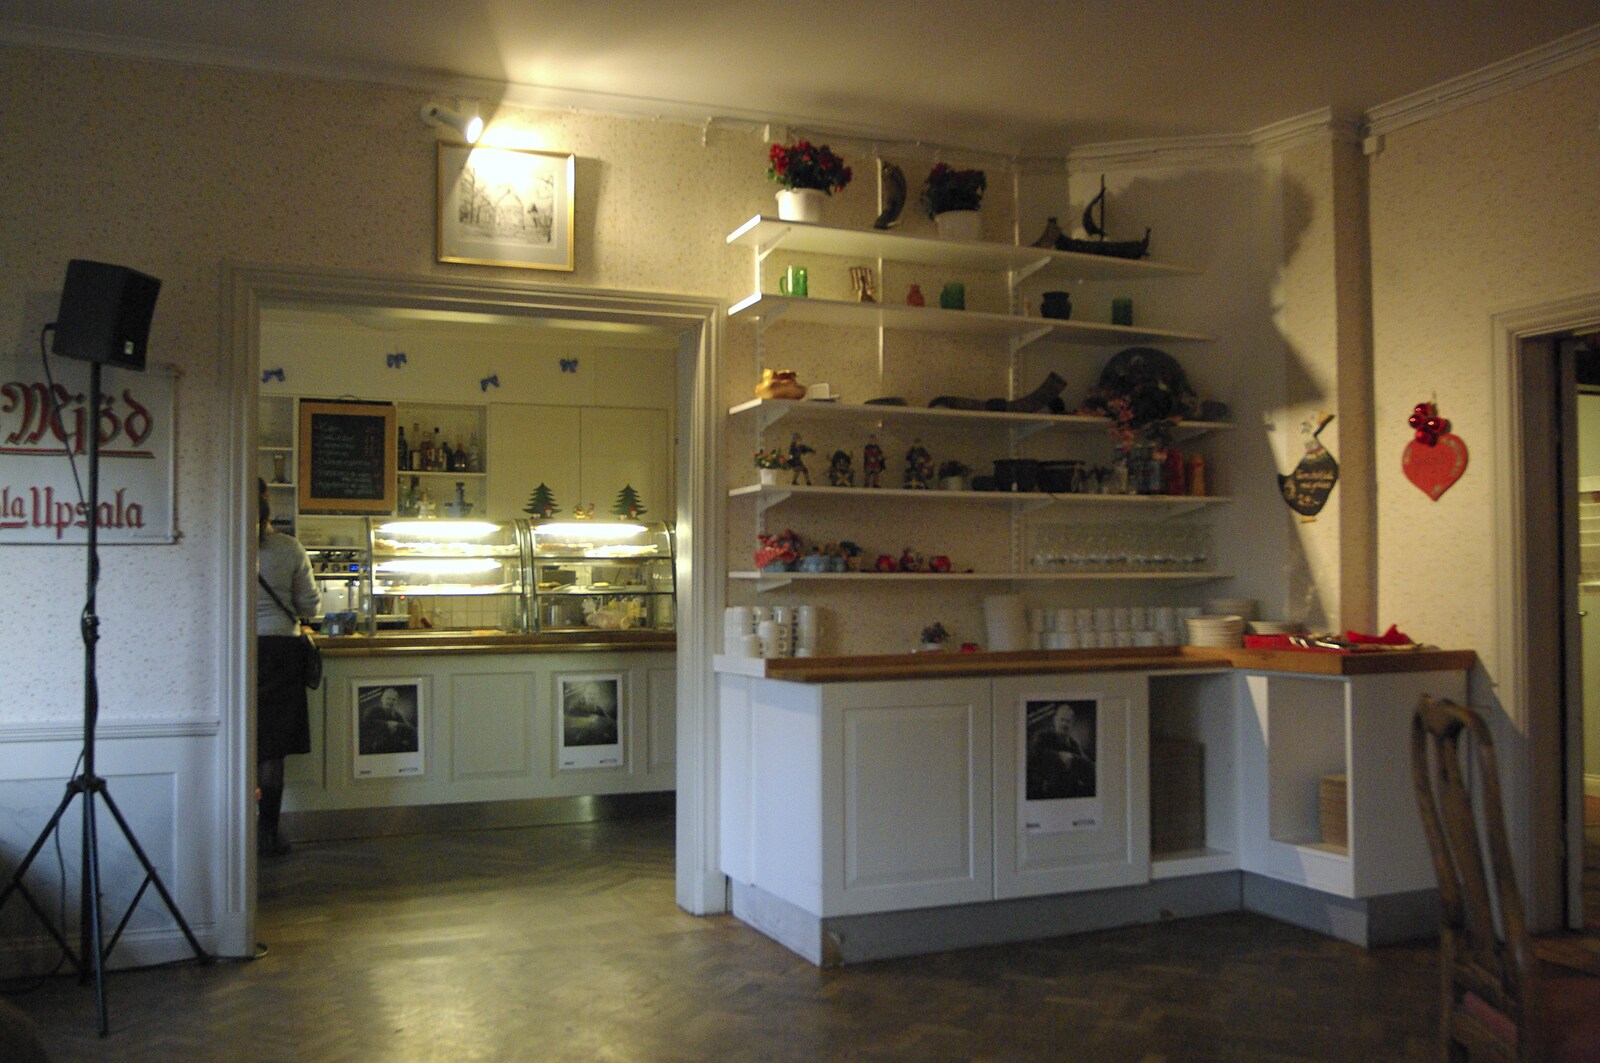 Inside a café from Gamla Uppsala, Uppsala County, Sweden - 16th December 2007